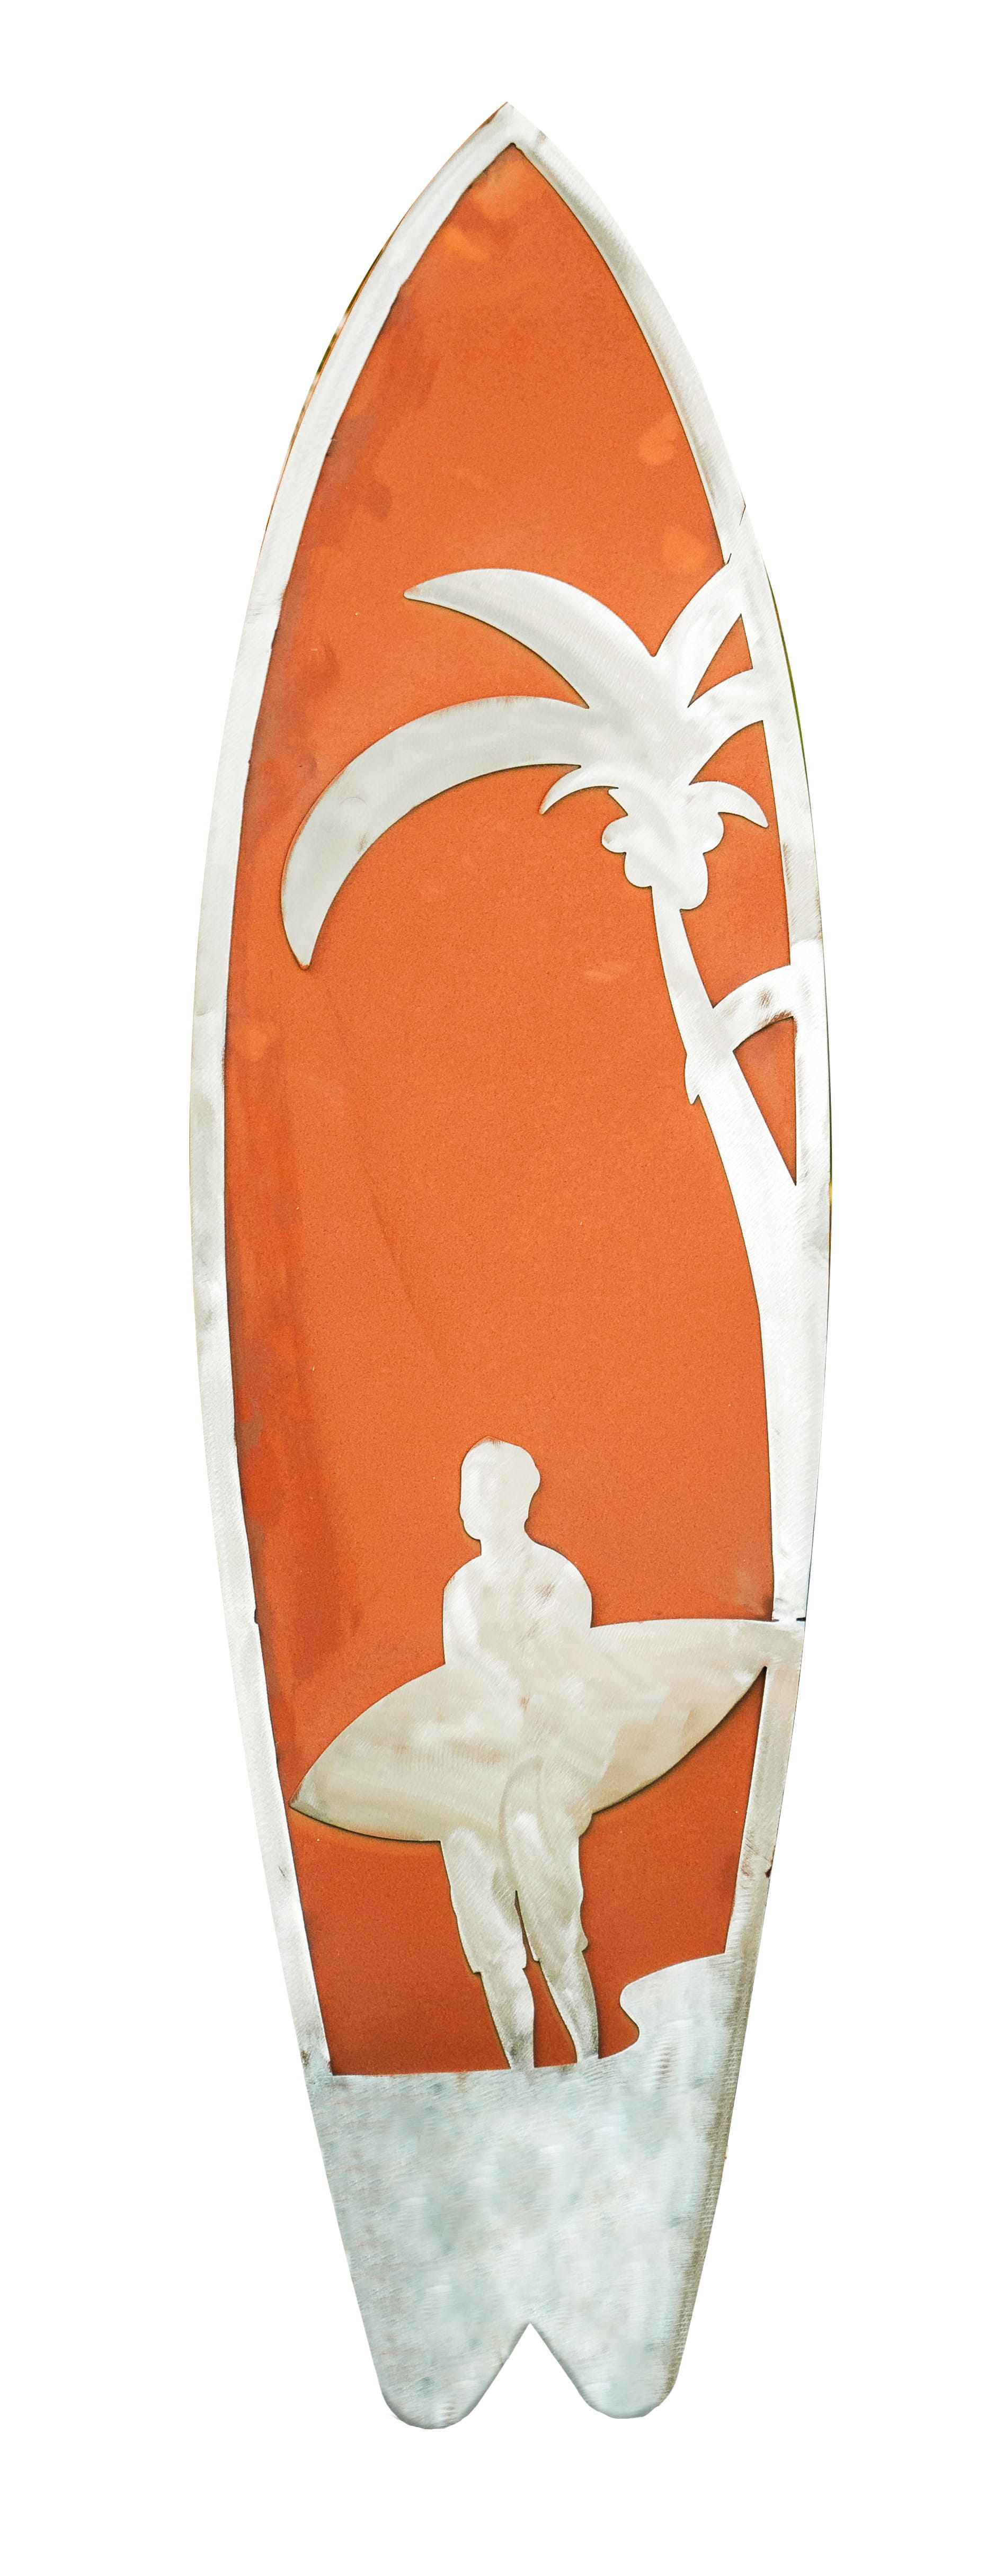 Ferrum Art Design Rost Surfbrett, 110 cm